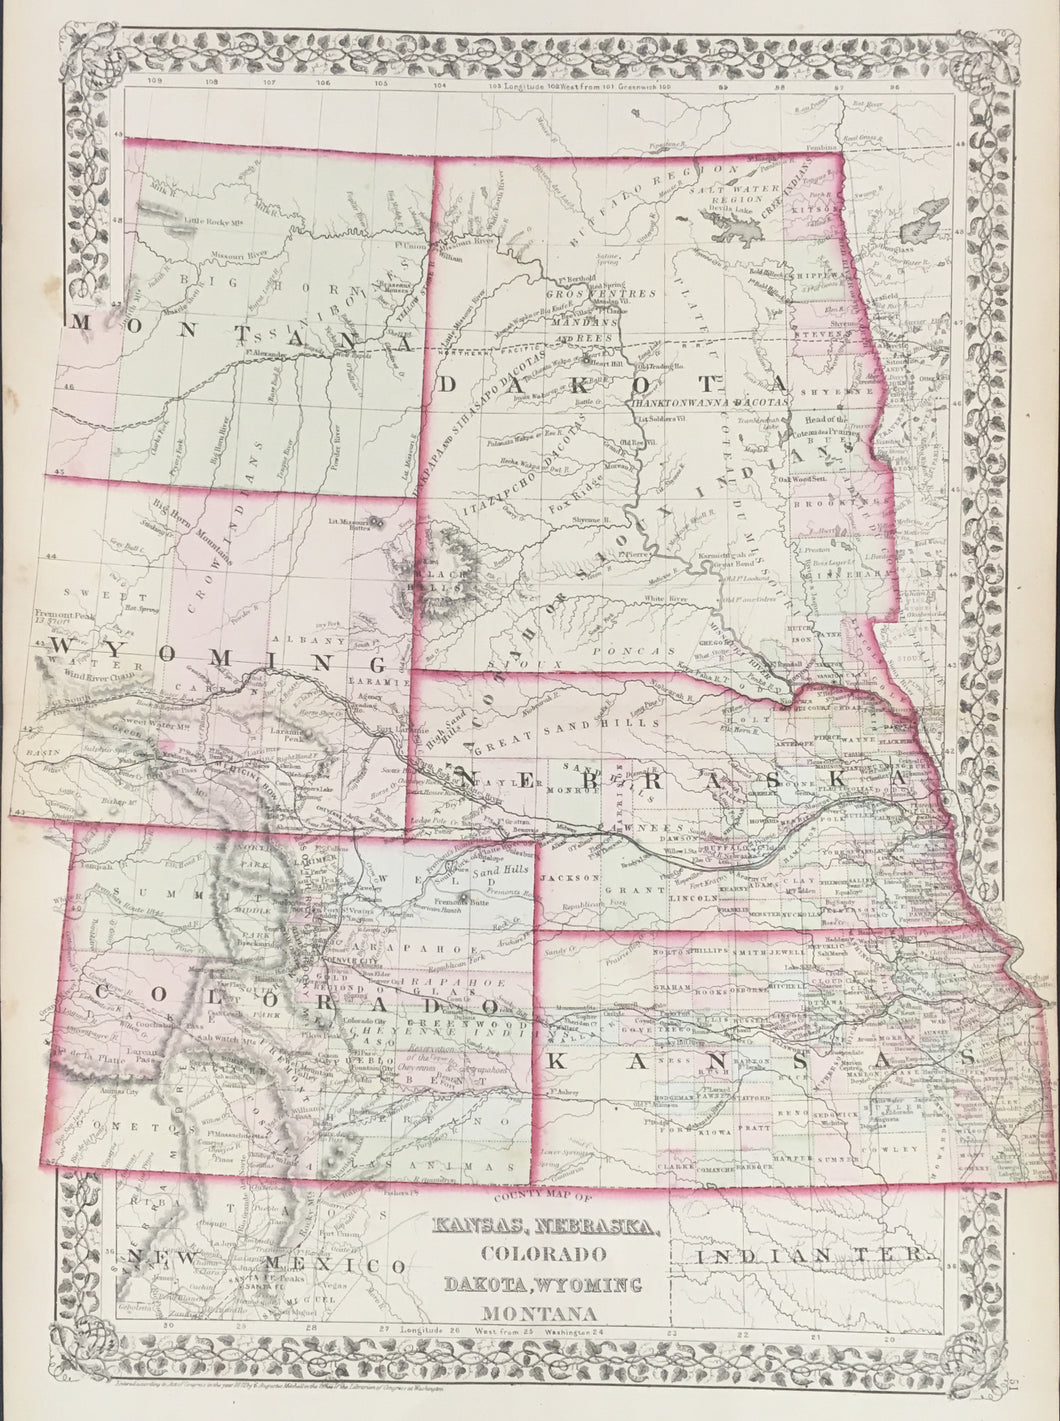 Mitchell, S. Augustus  “County Map of Kansas, Nebraska, Colorado, Dakota, Wyoming, Montana”